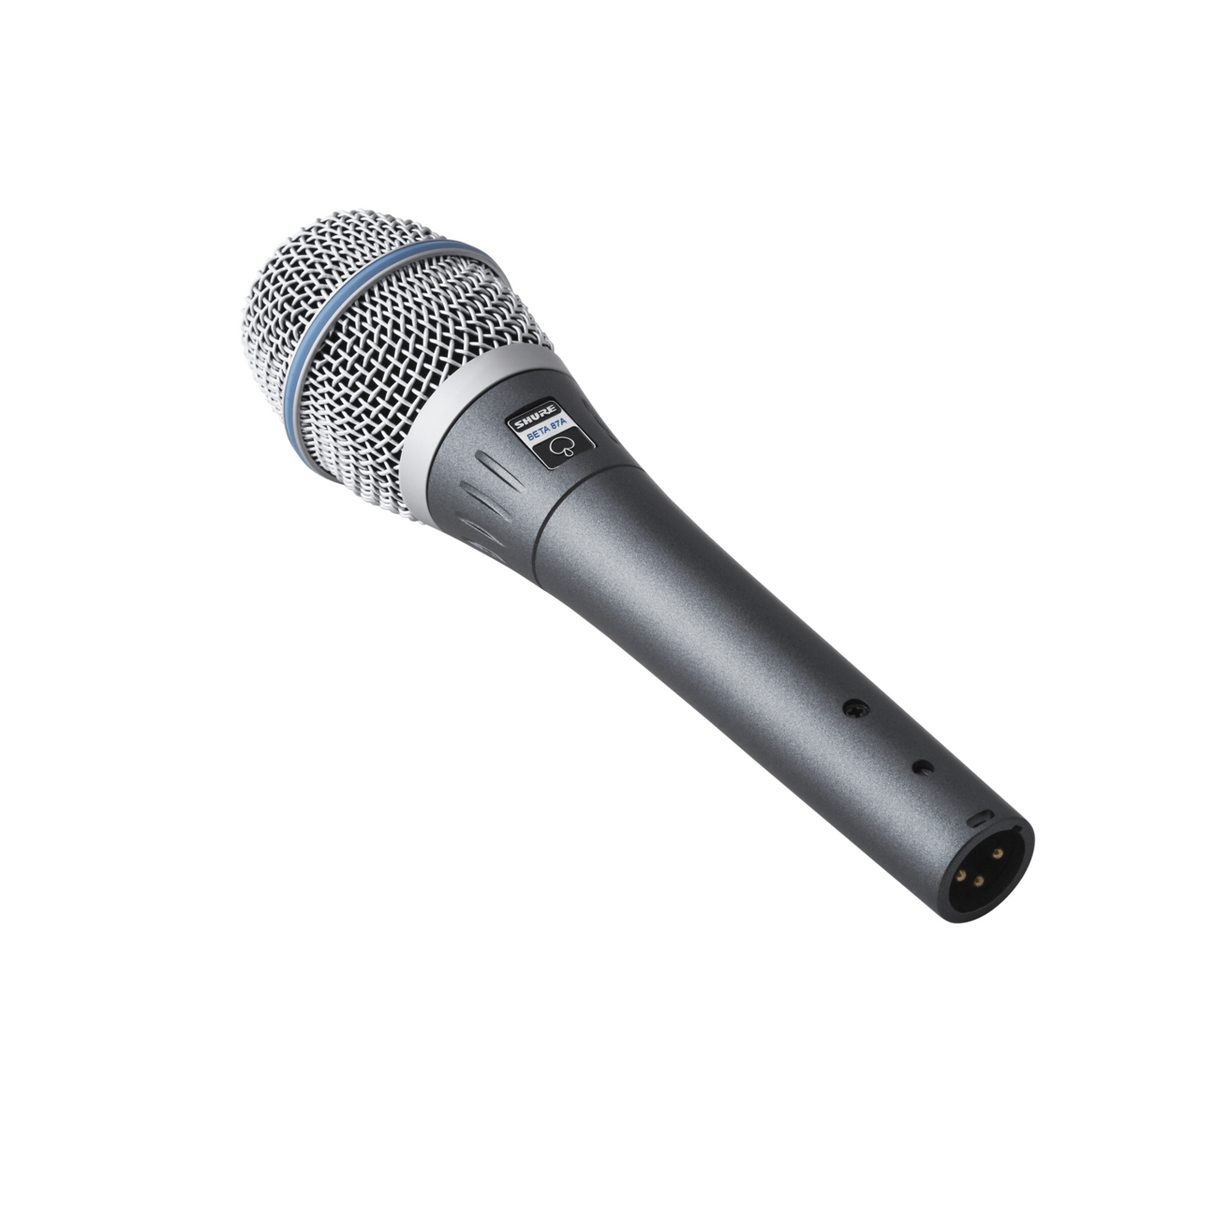 Shure BETA 87A Handheld Cardioid Condenser Microphone